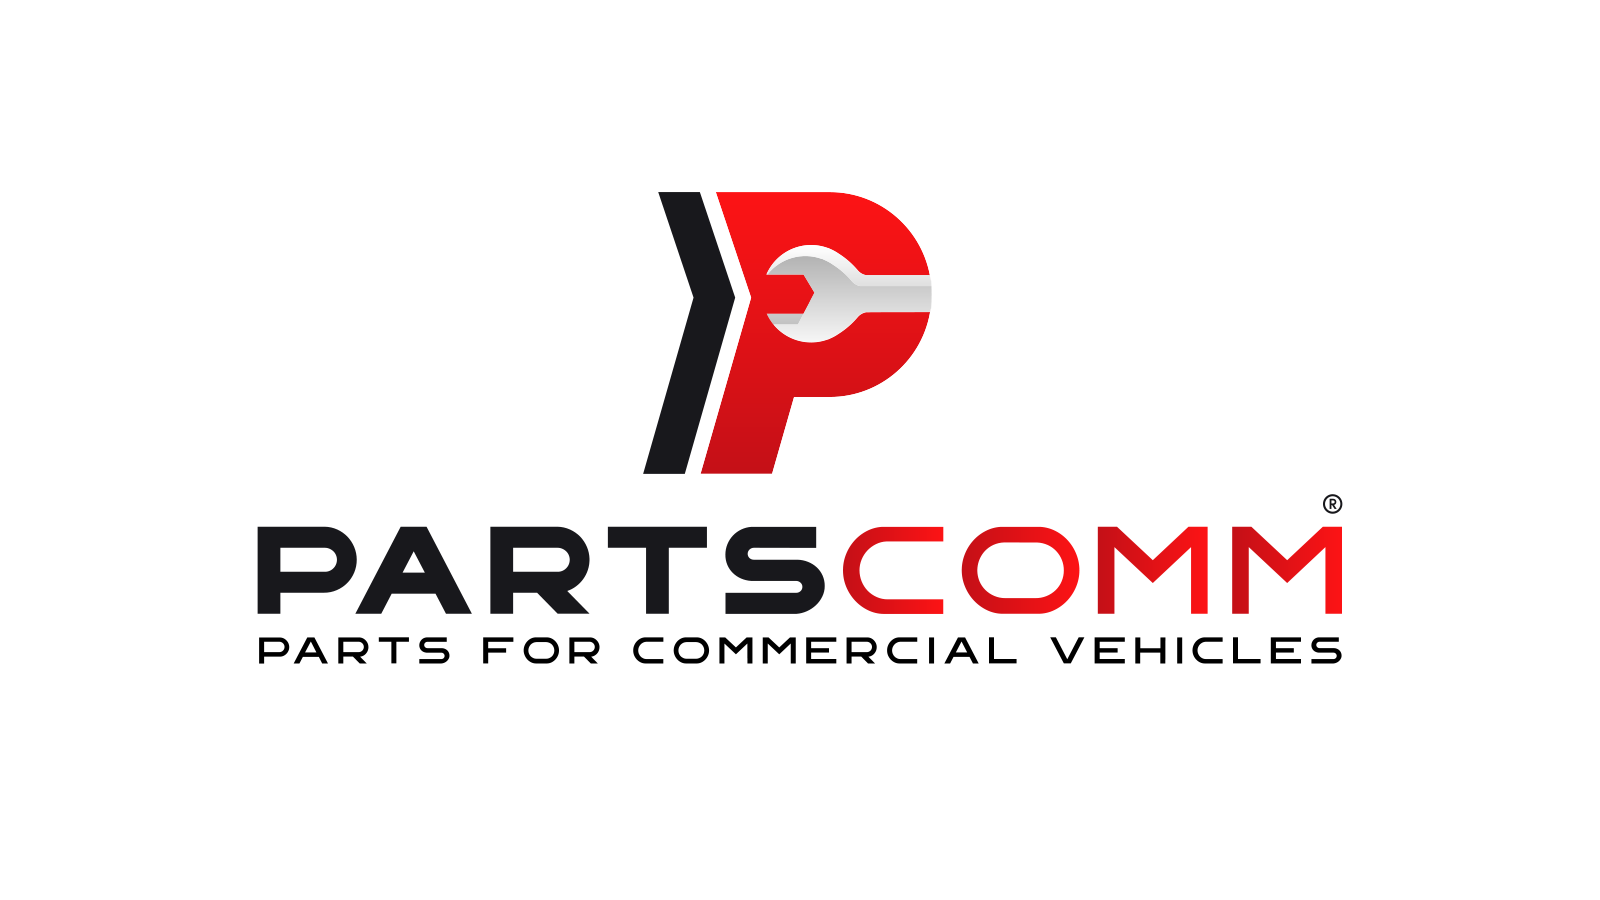 Commercial vehicle parts supplier Major brands